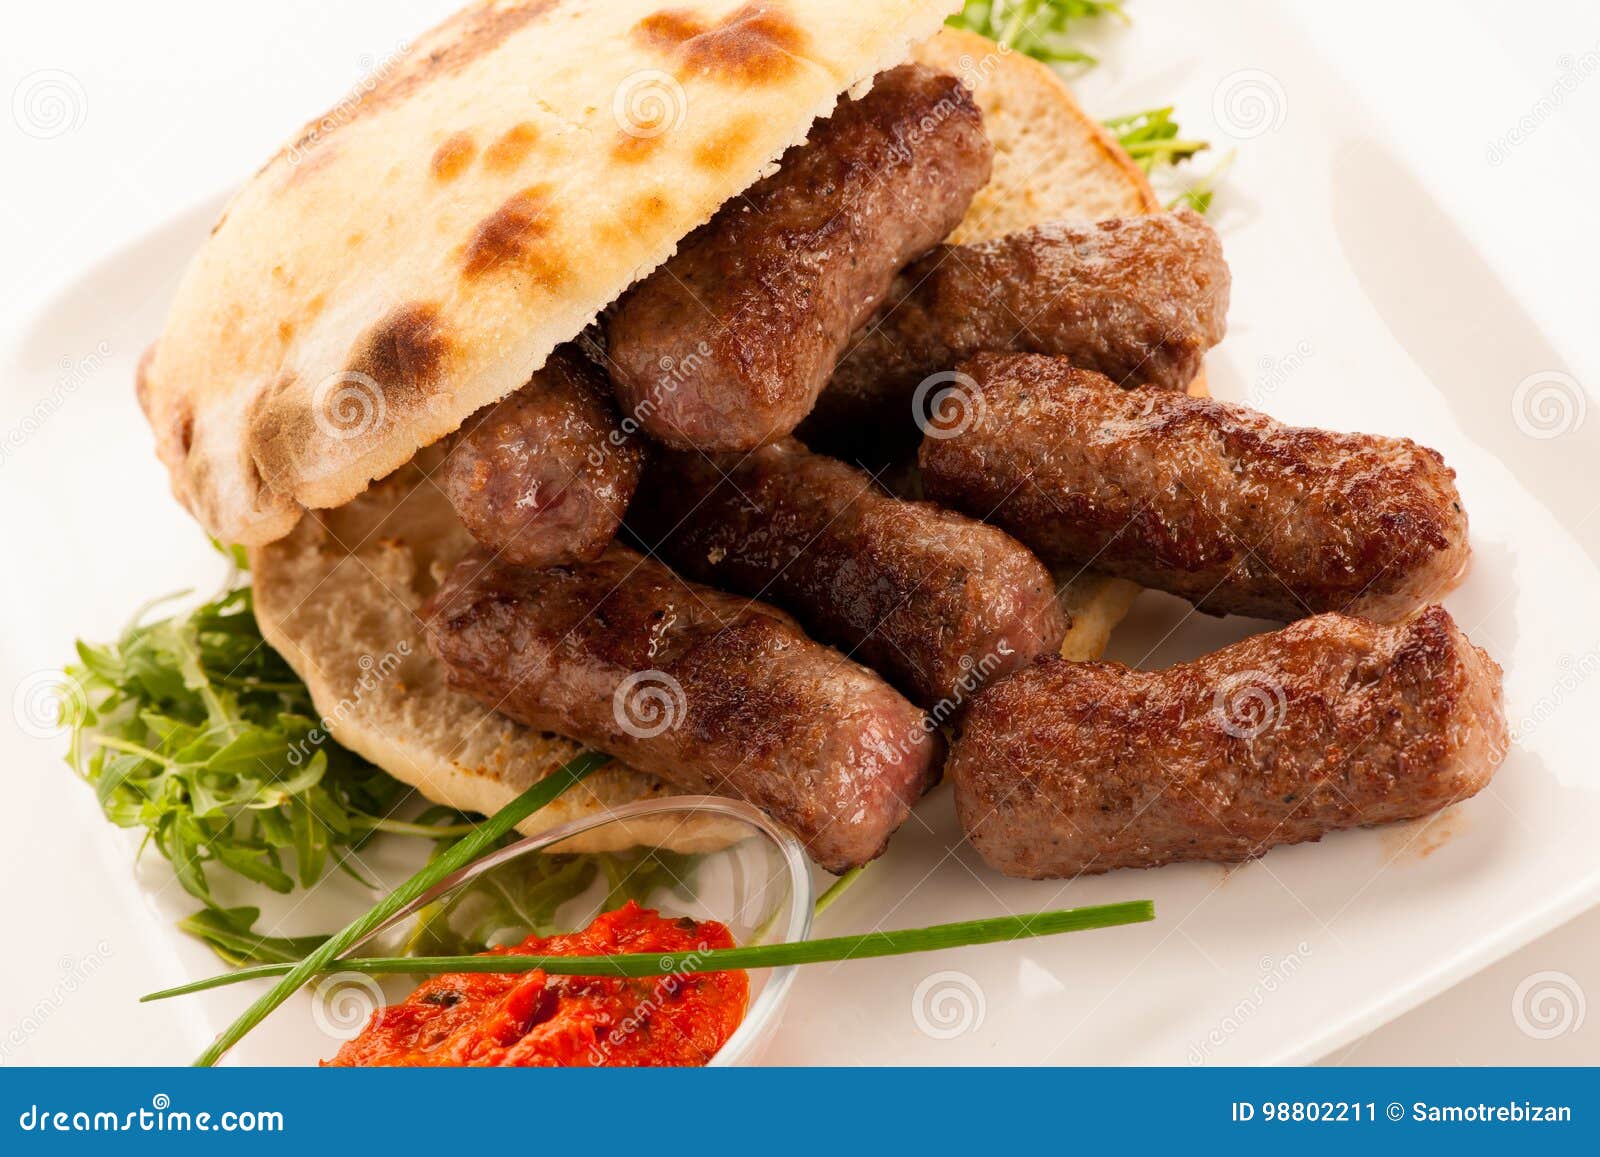 photo of cevapi, cevapcici, traditional balkan food - delicius